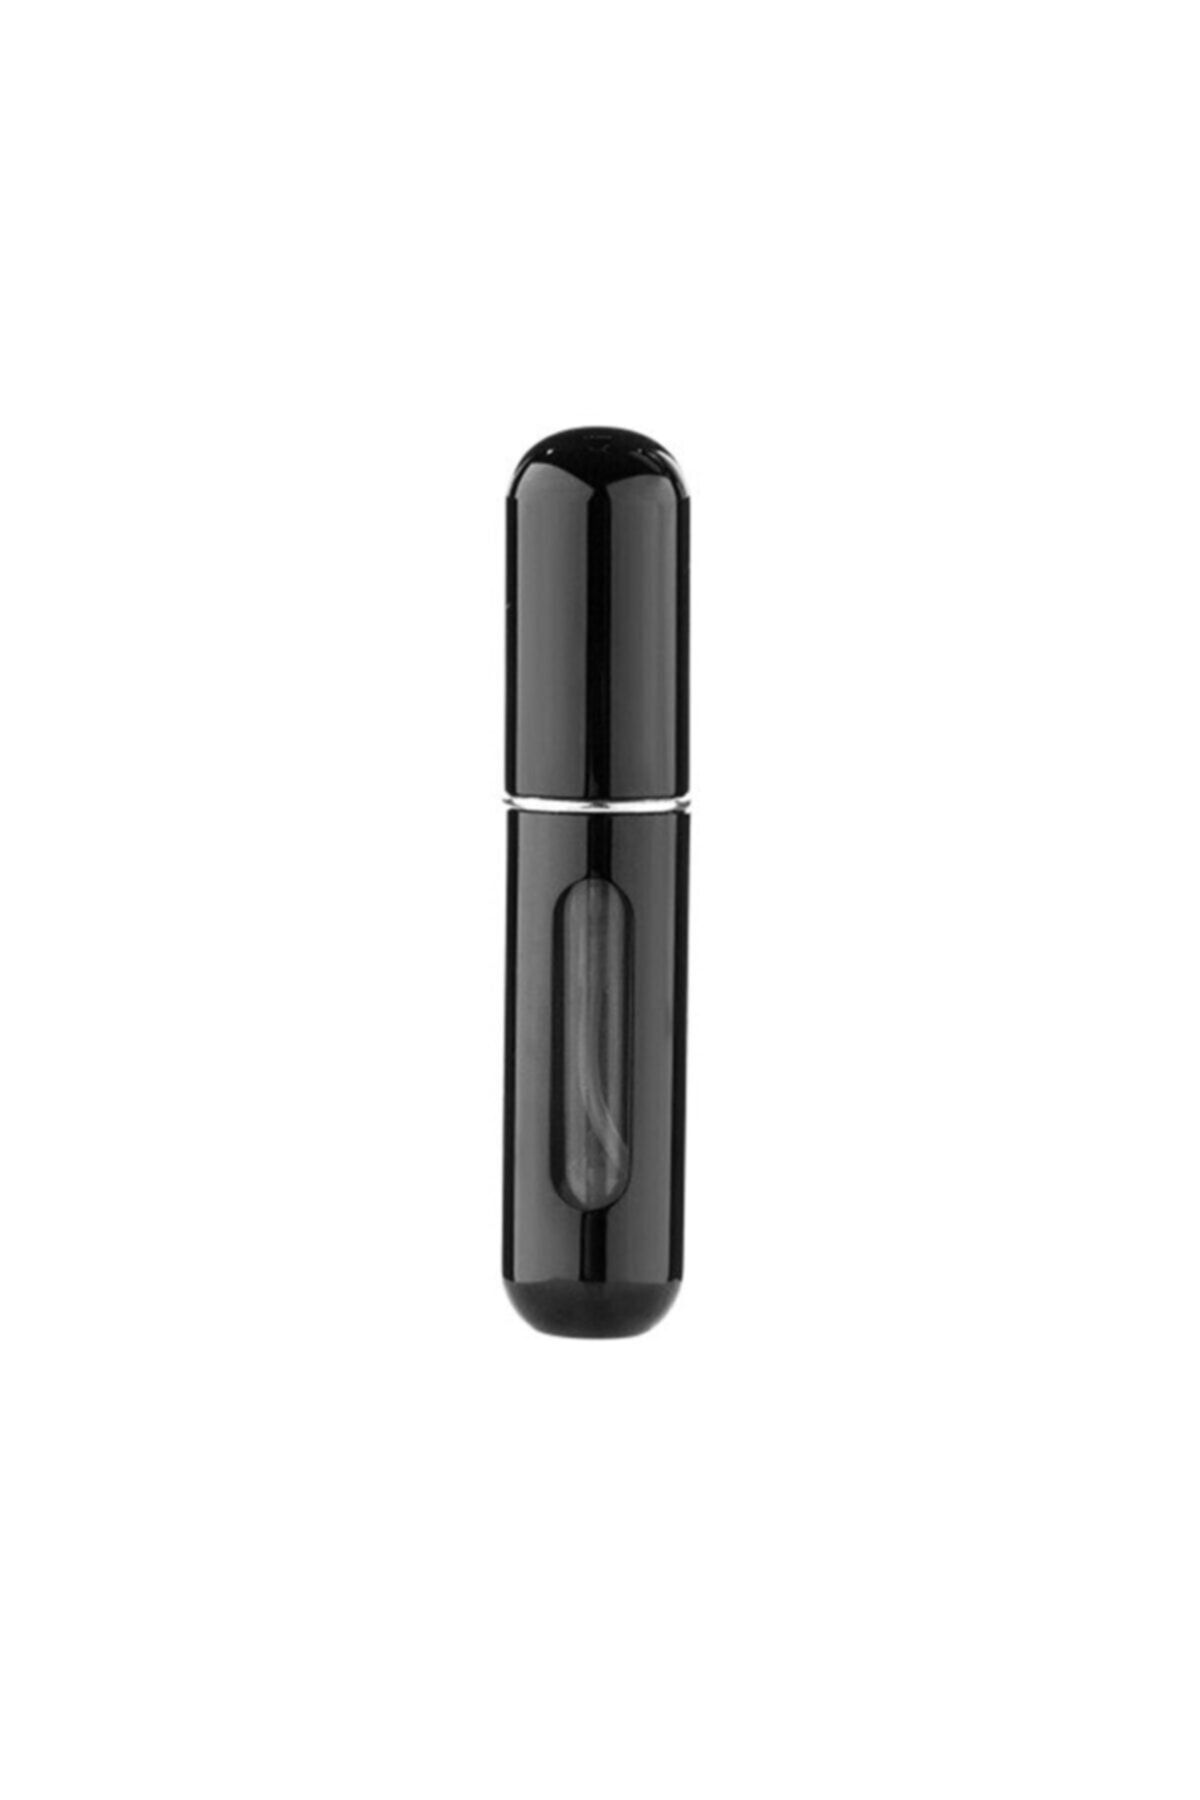 Dream Plus Siyah Cep Parfüm Şişesi Atomizer Seyahat Parfüm Şişesi Cep Kolonya Şişesi 5 ml